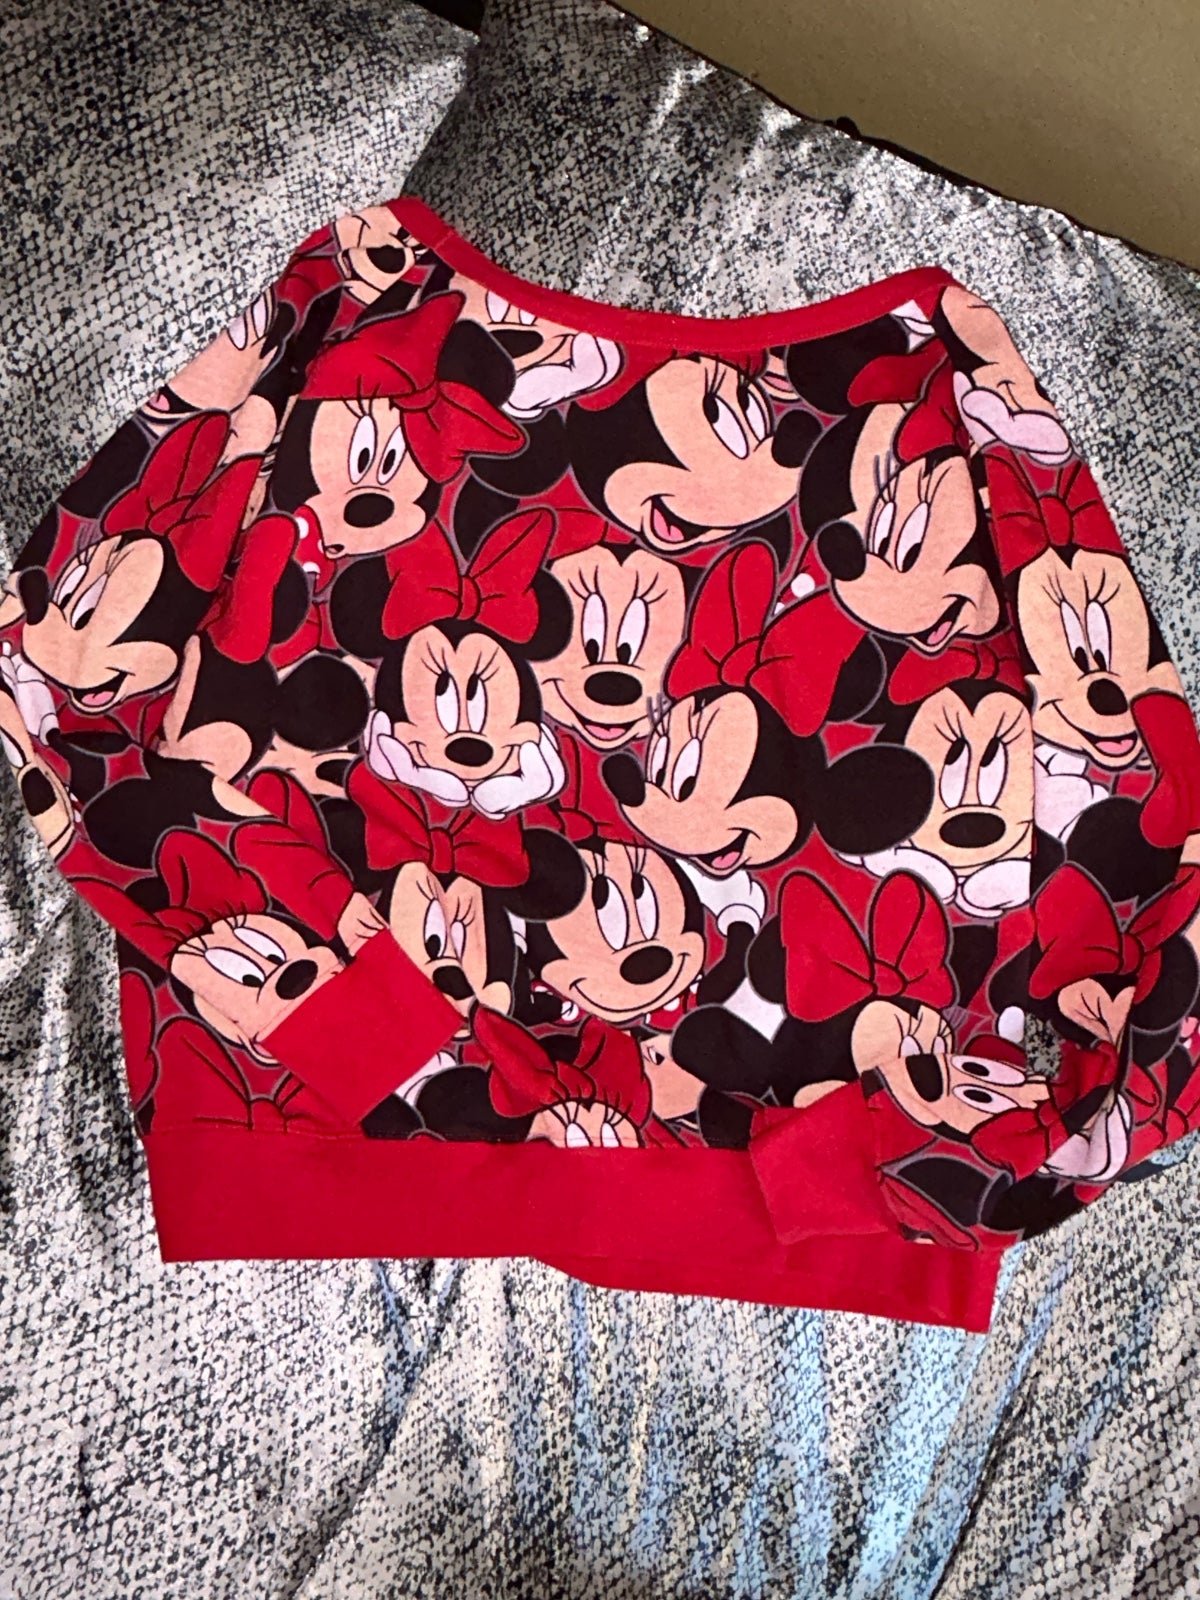 Wholesale price Disney Minnie Mouse pullover sweatshirt XL OBniXARKS outlet online shop